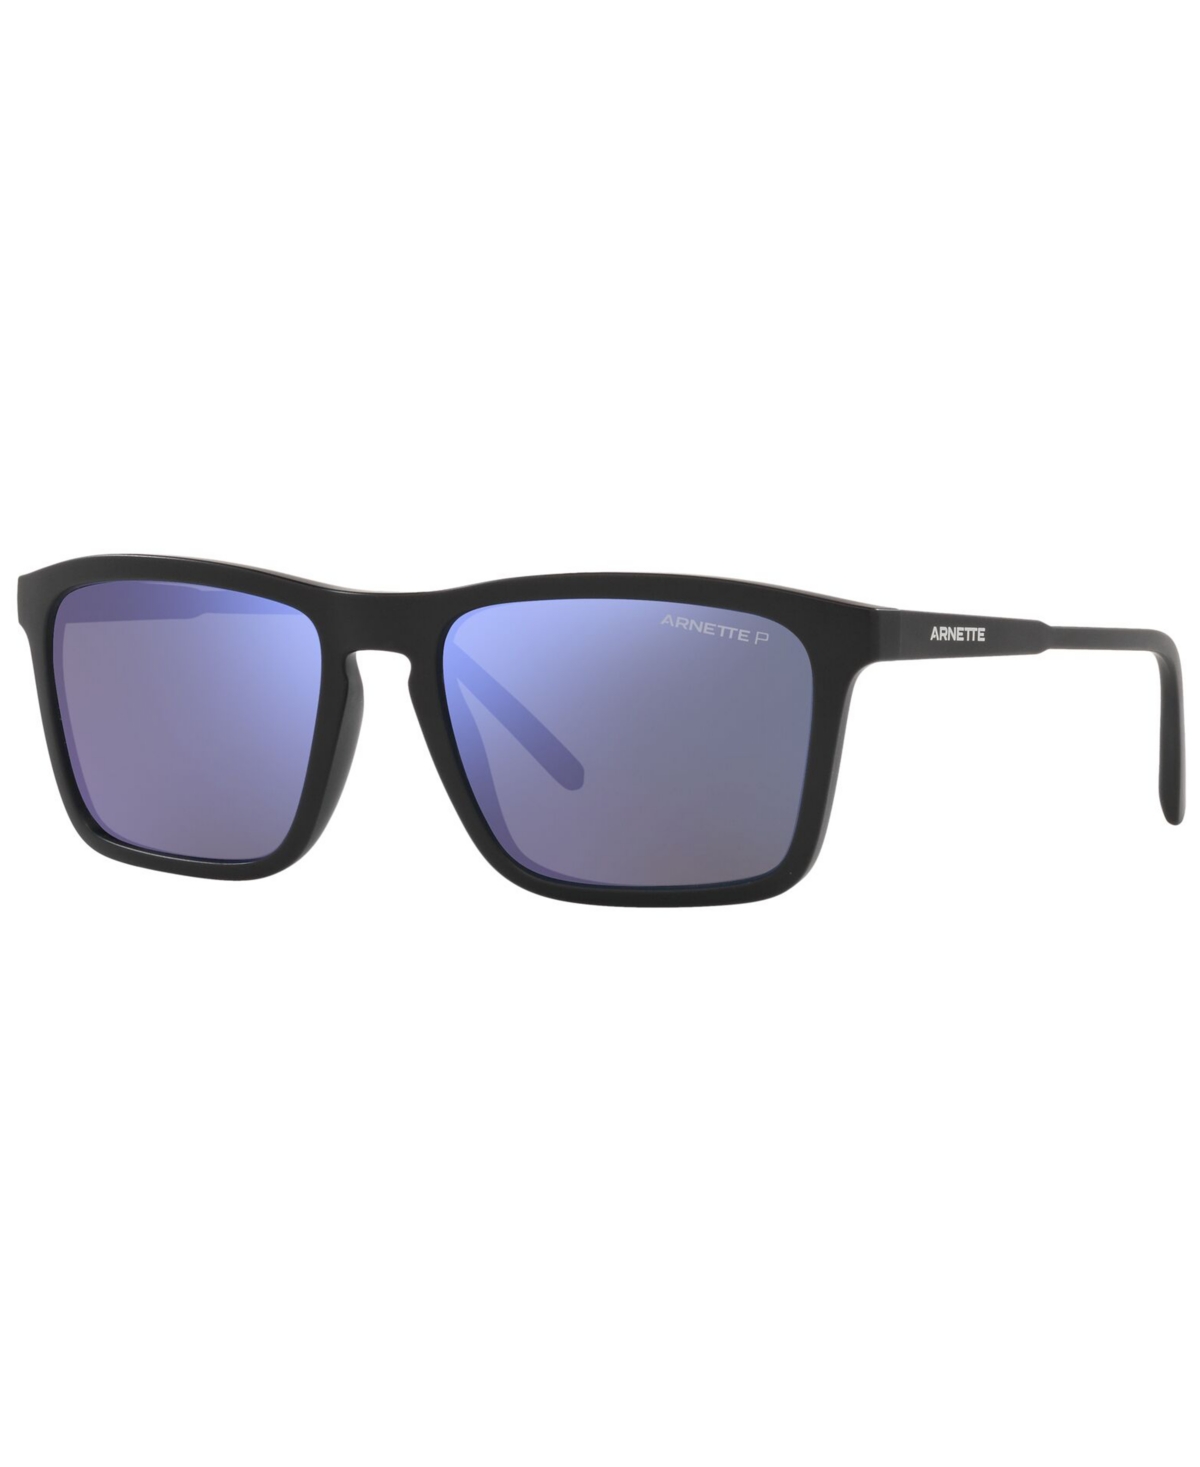 Men's Polarized Sunglasses, AN4283 56 - MATTE BLACK/POLAR DK GREY MIRROR WATER